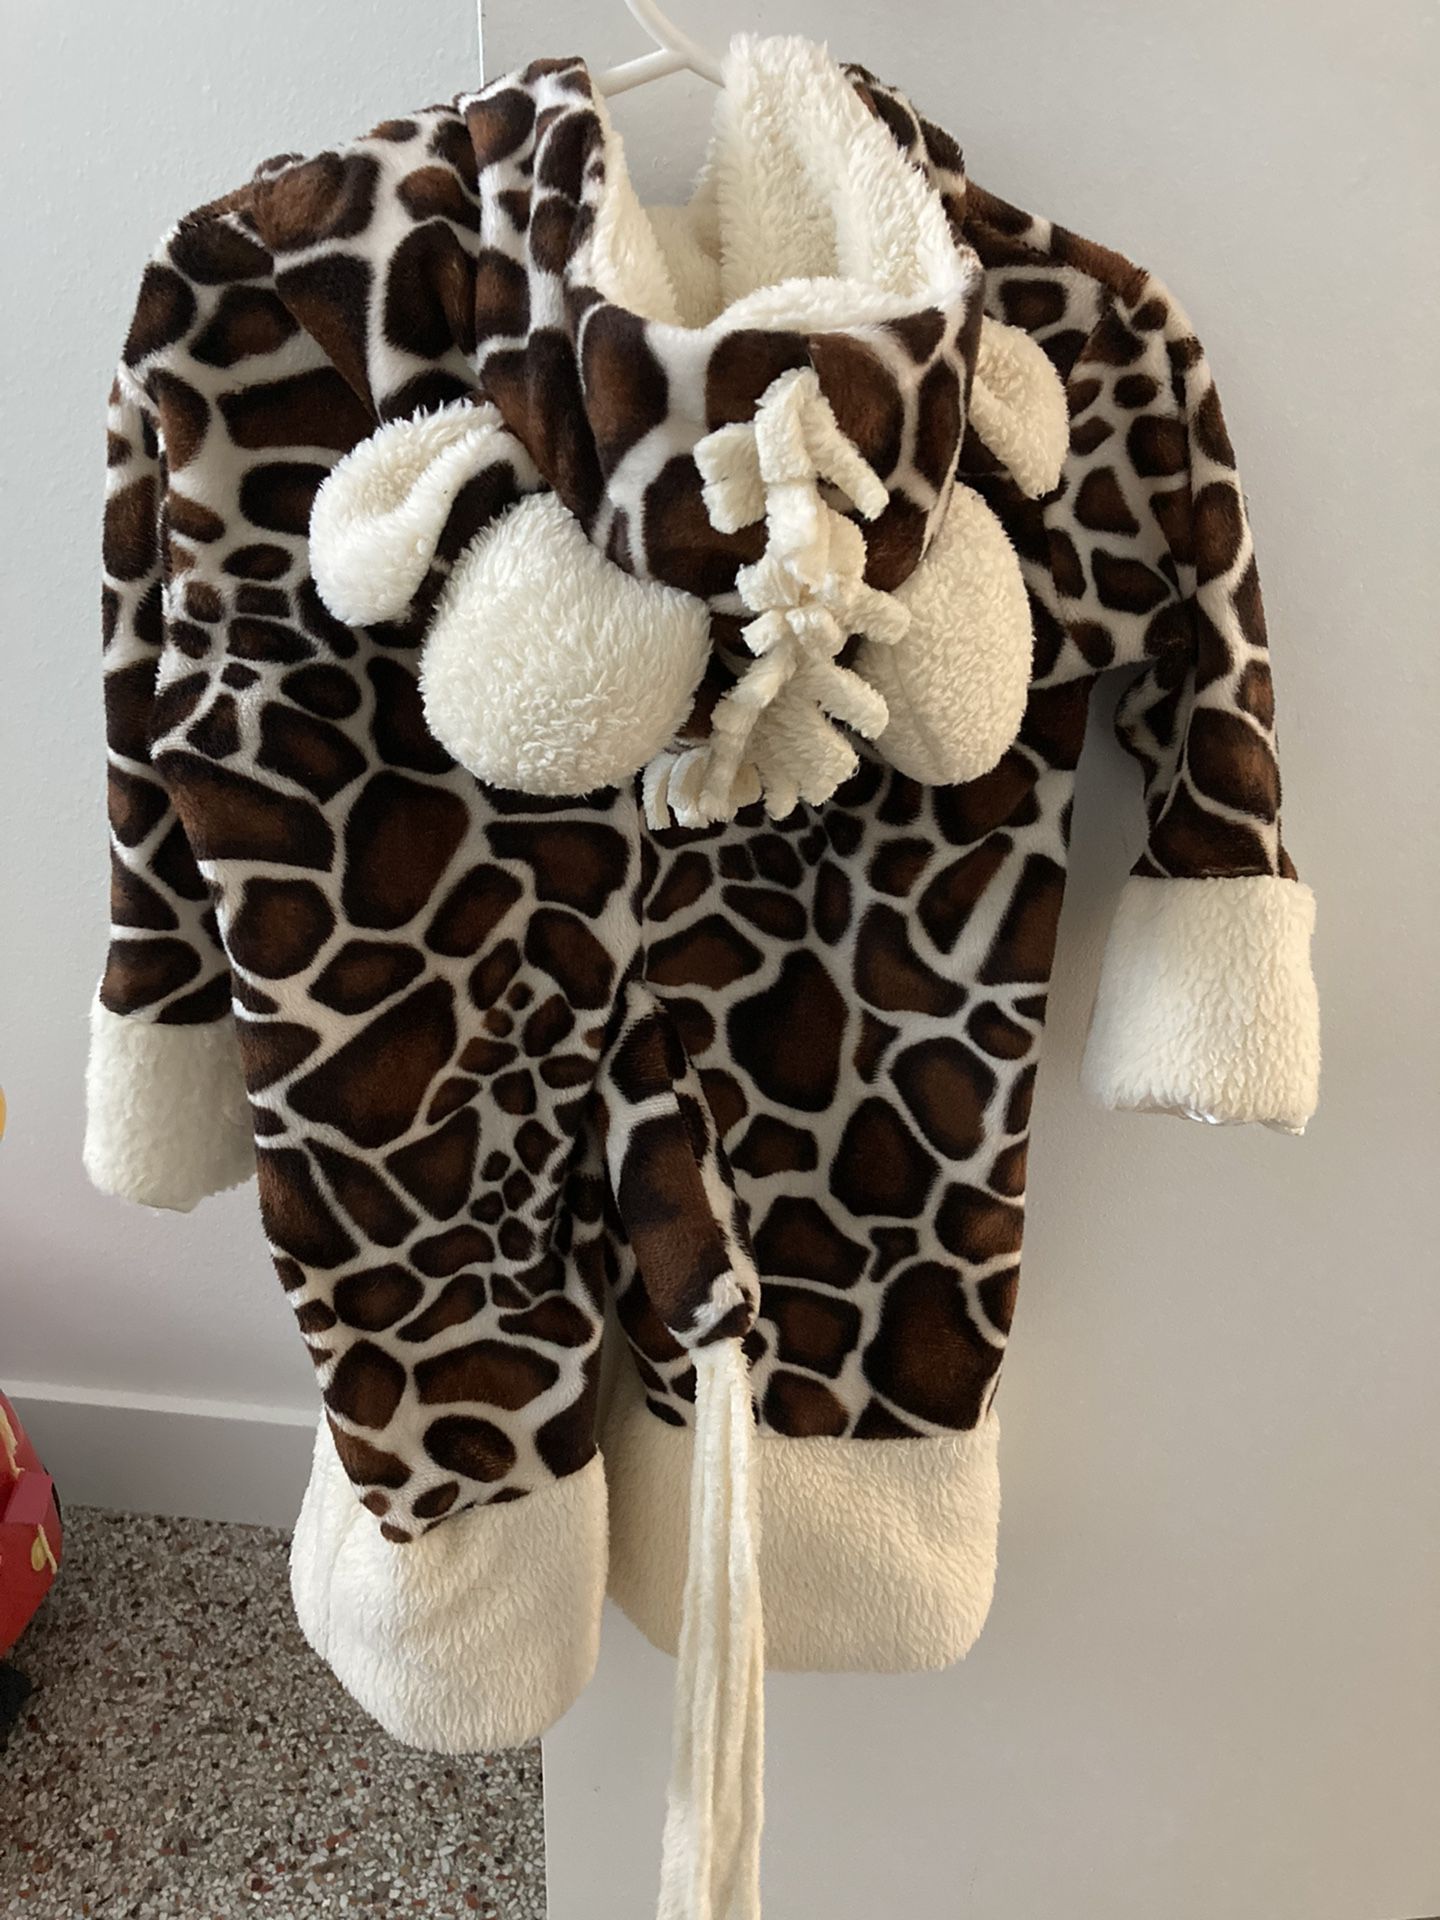 Giraffe Costume Size 6-8m